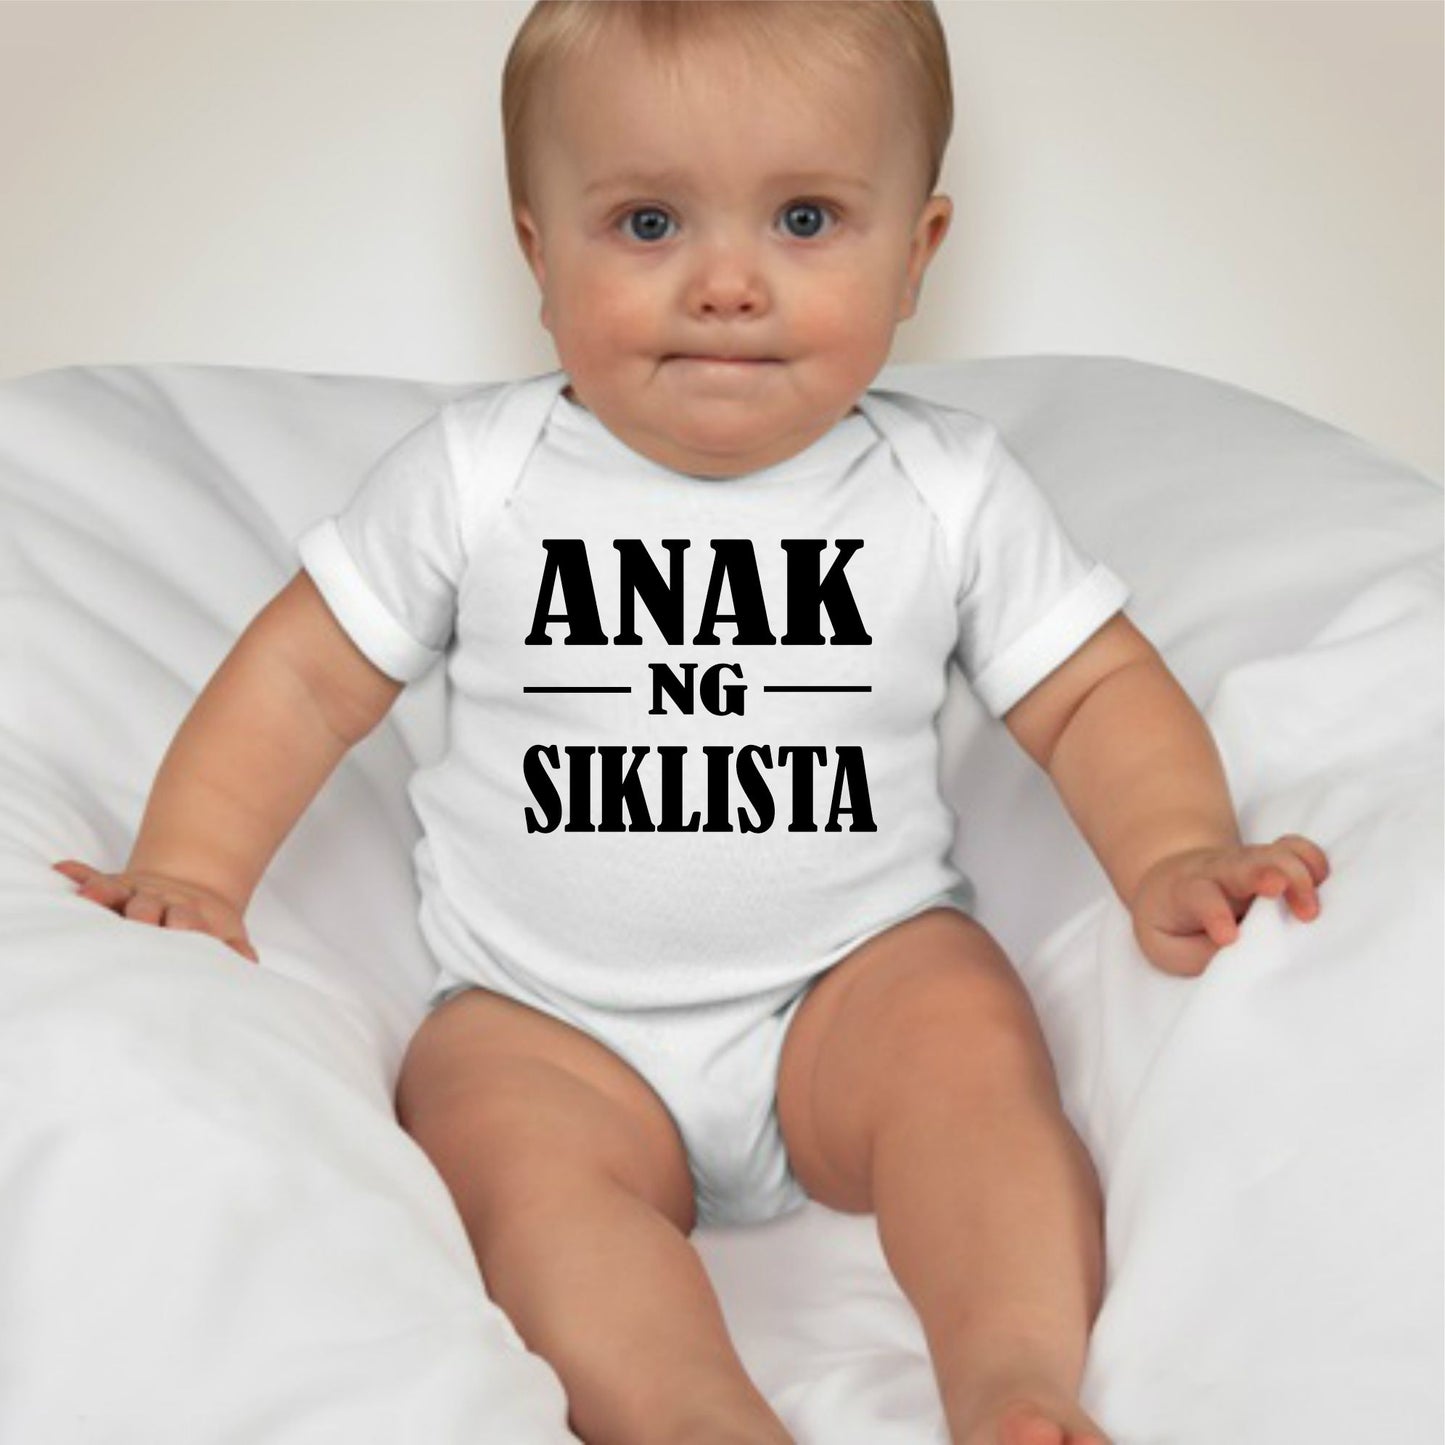 Baby Statement Onesies - Anak ng Siklista